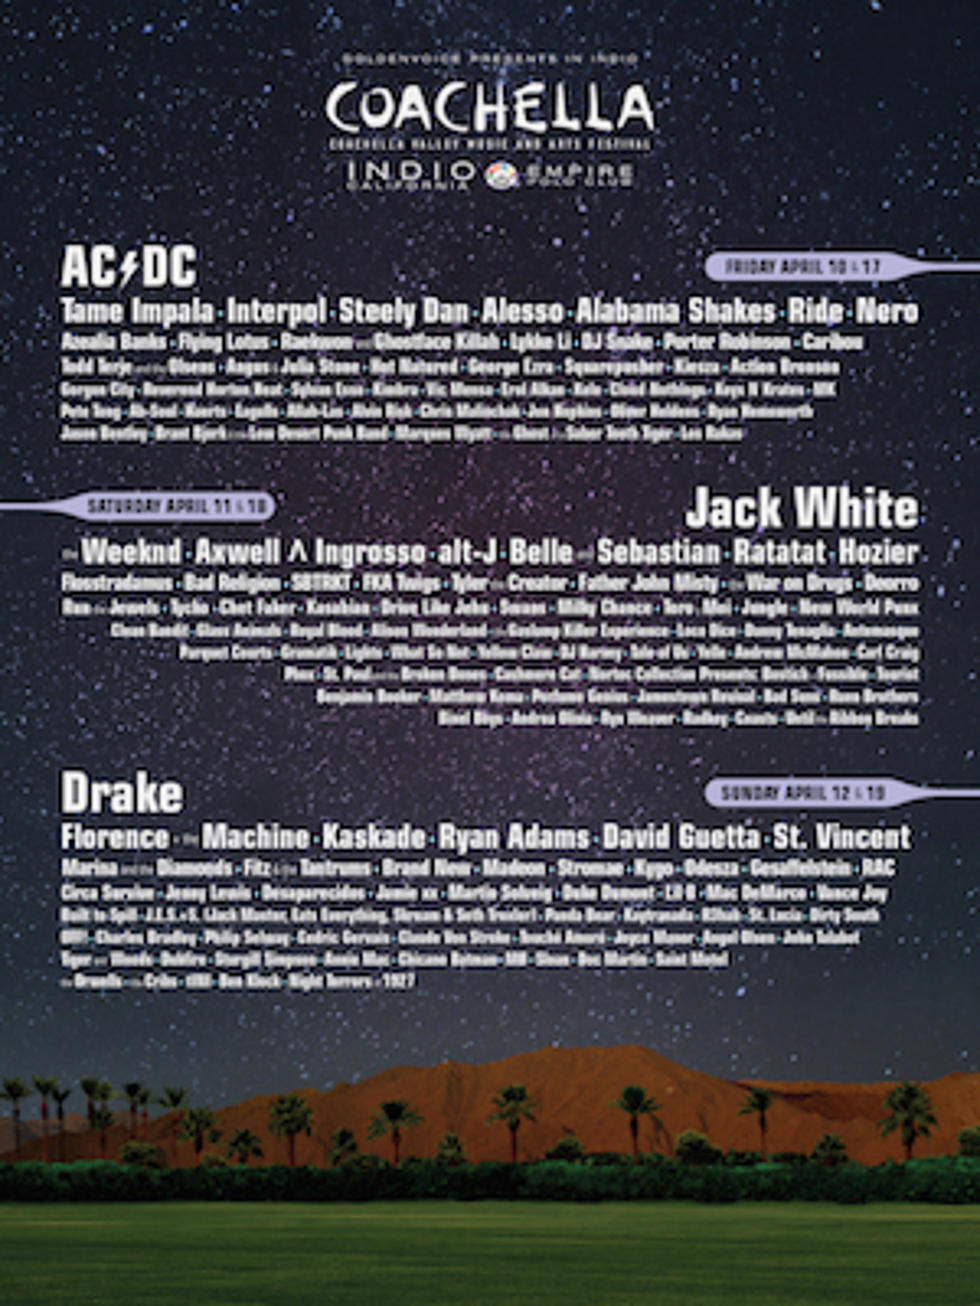 AC/DC to Headline 2015 Coachella Festival Along With Jack White + Drake